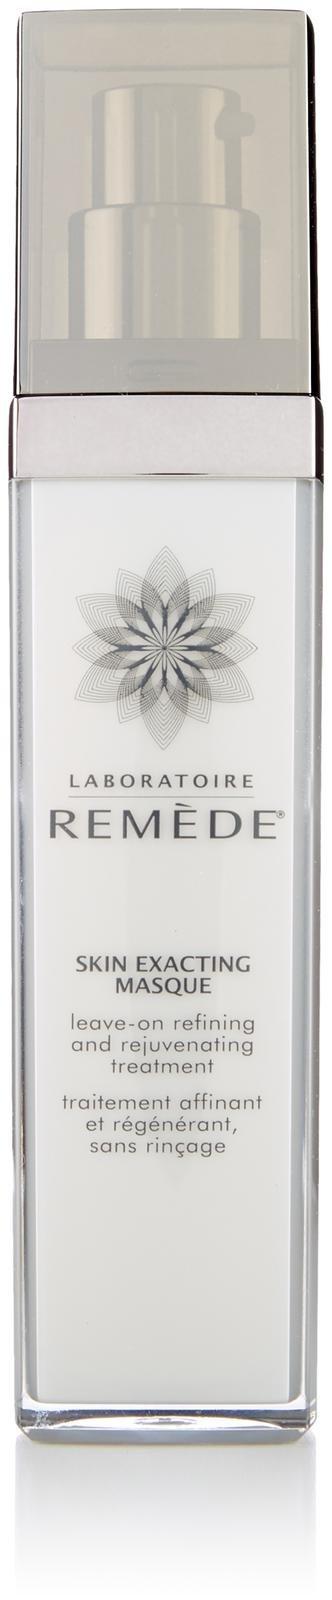 Remede Skin Exacting Masque - 1.7 Oz